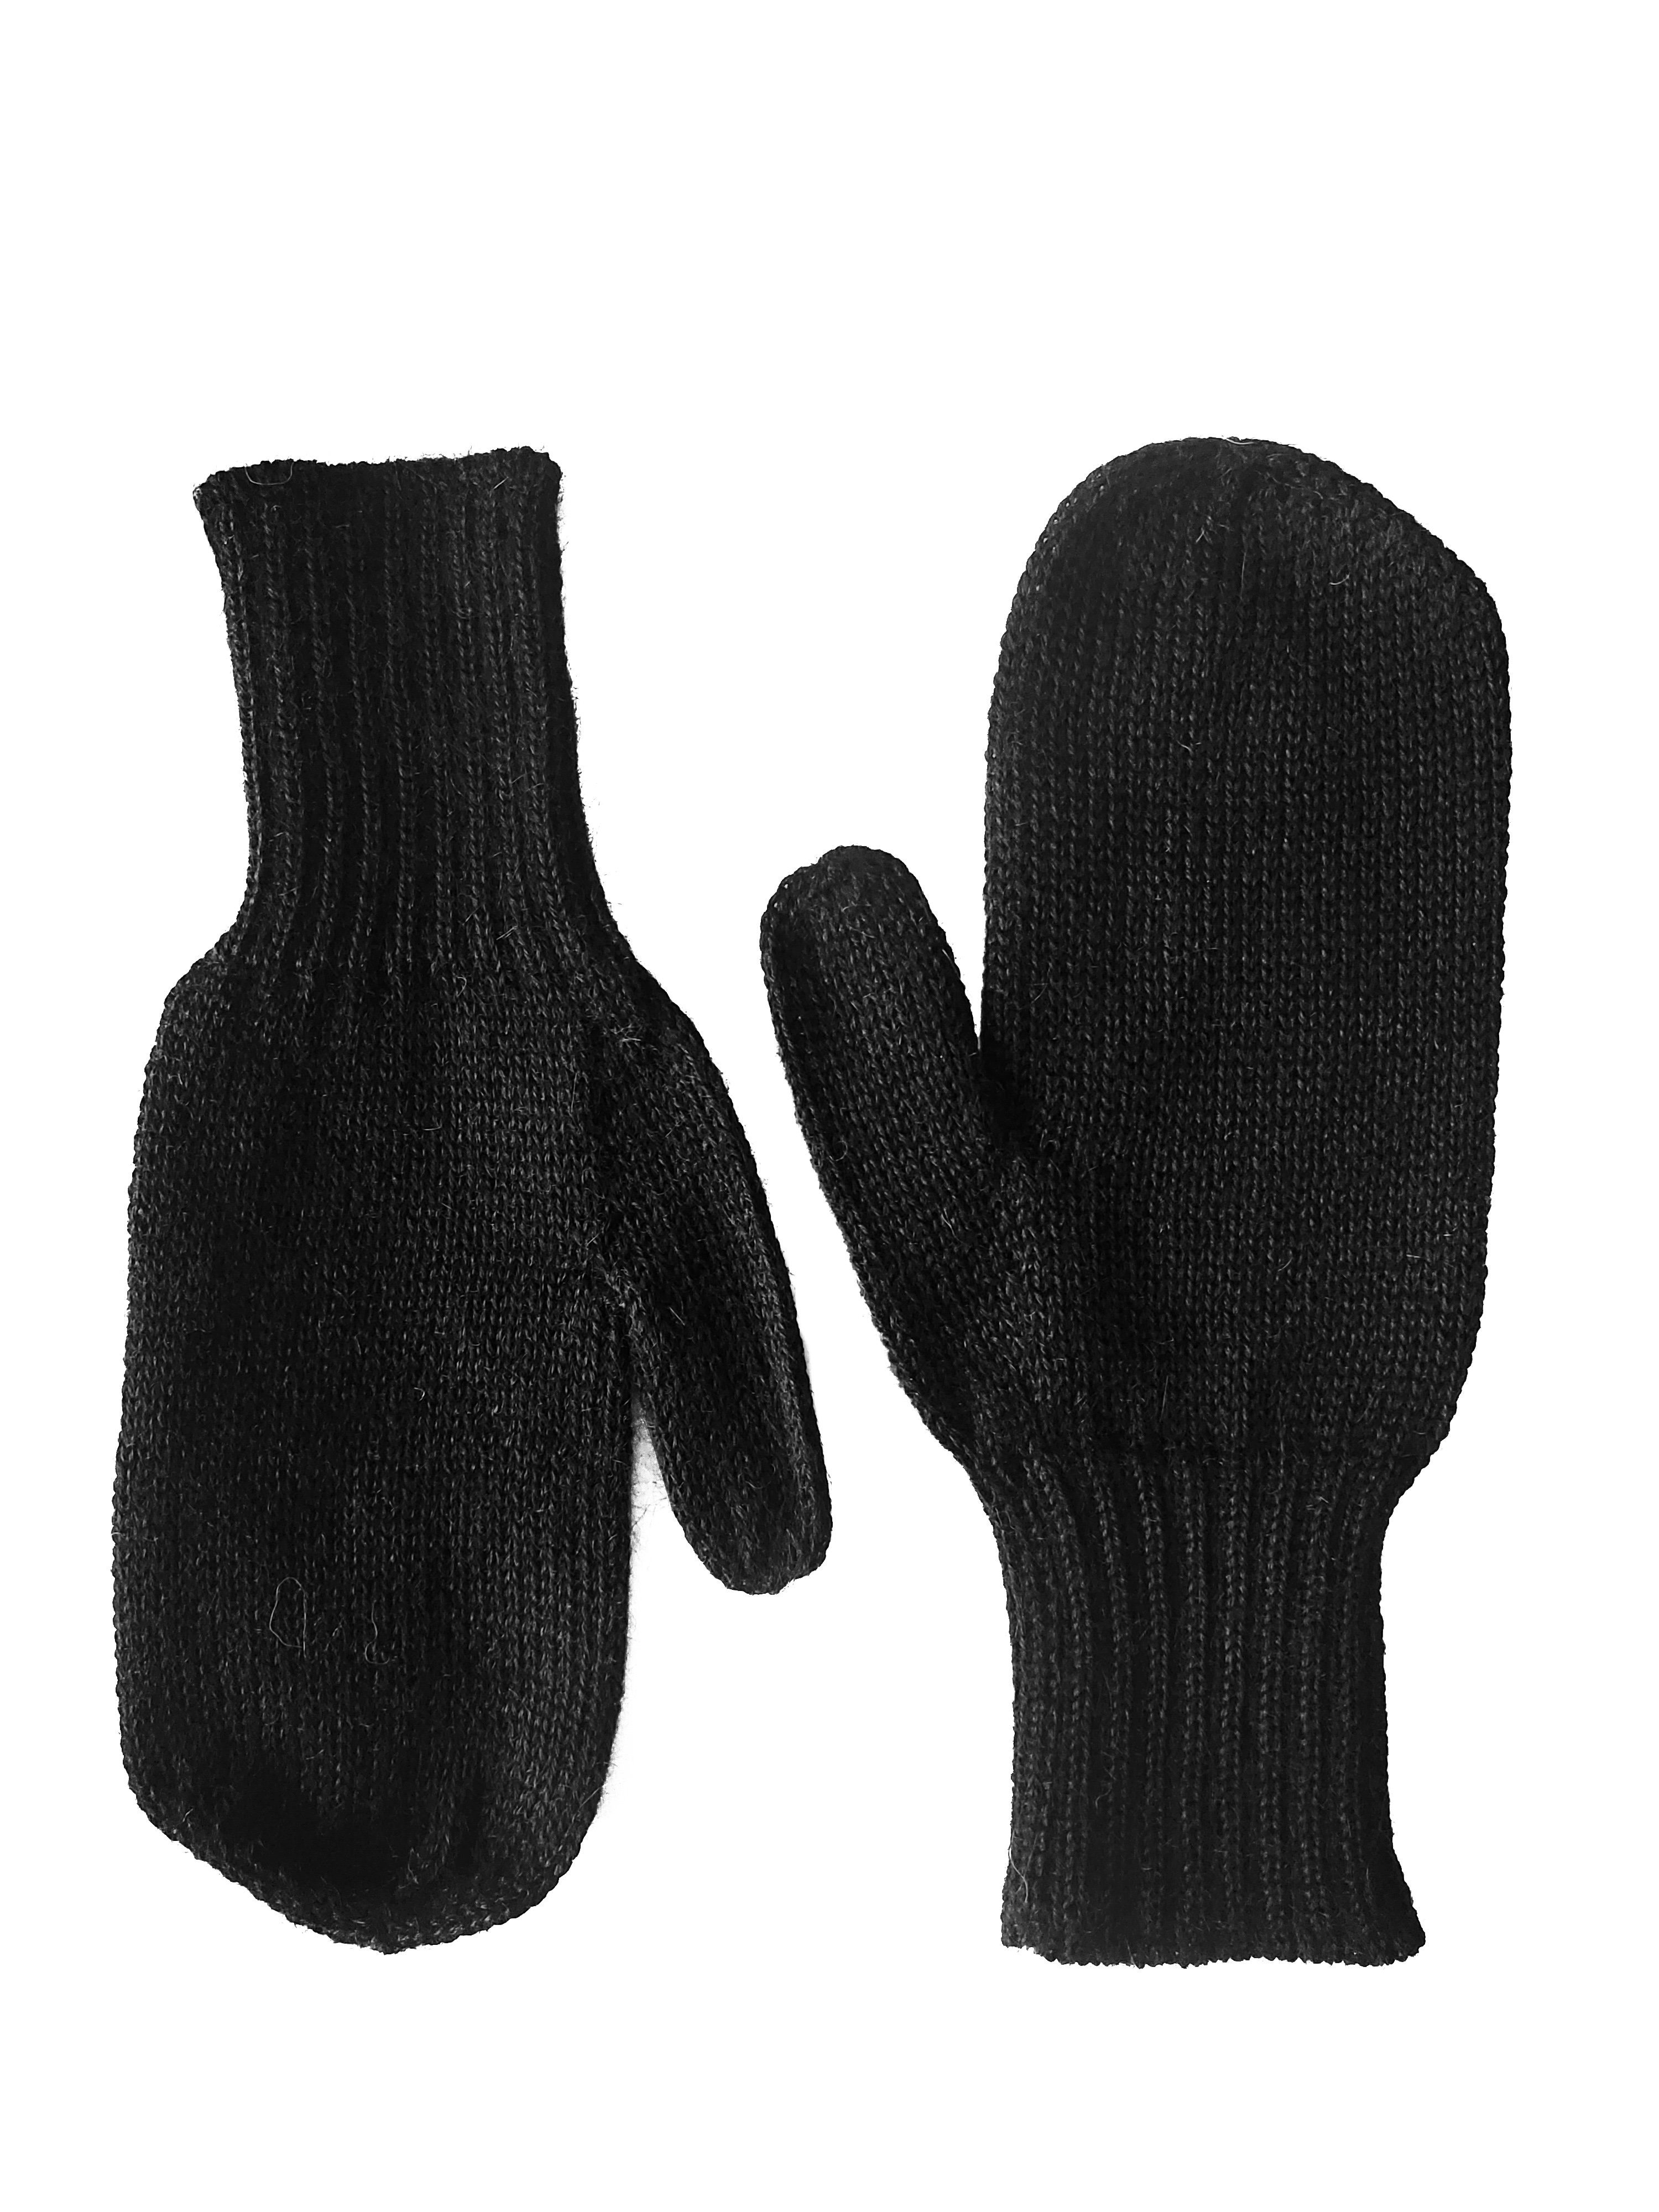 Handschuhe Posh Damen schwarz aus Pugnoguanti Alpaka Alpakawolle Herren 100% Gear Fäustlinge